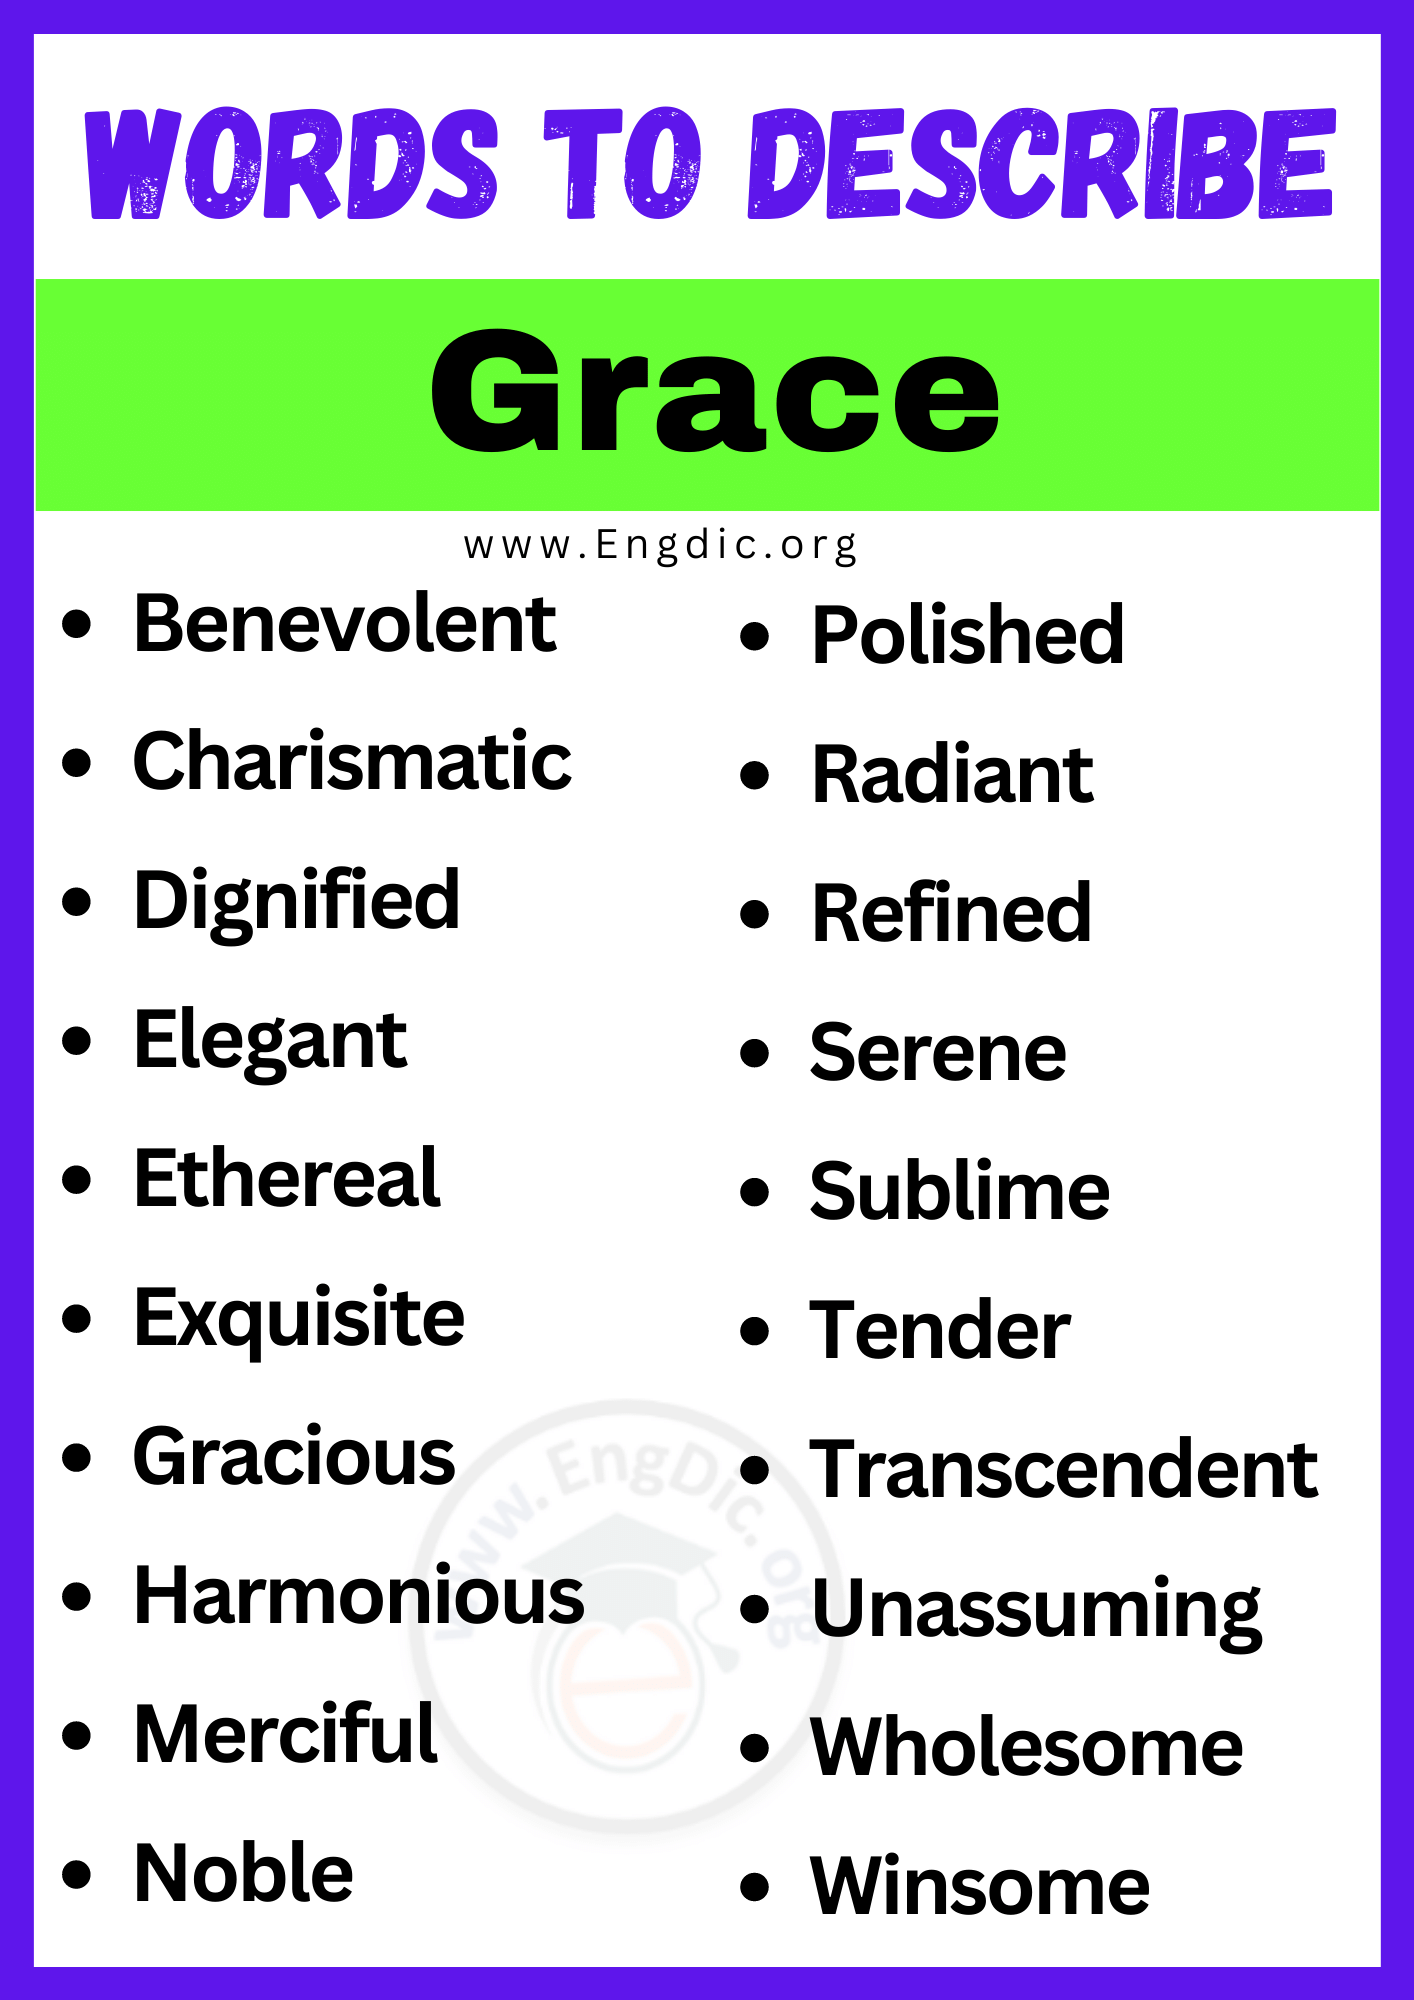 Words to Describe Grace